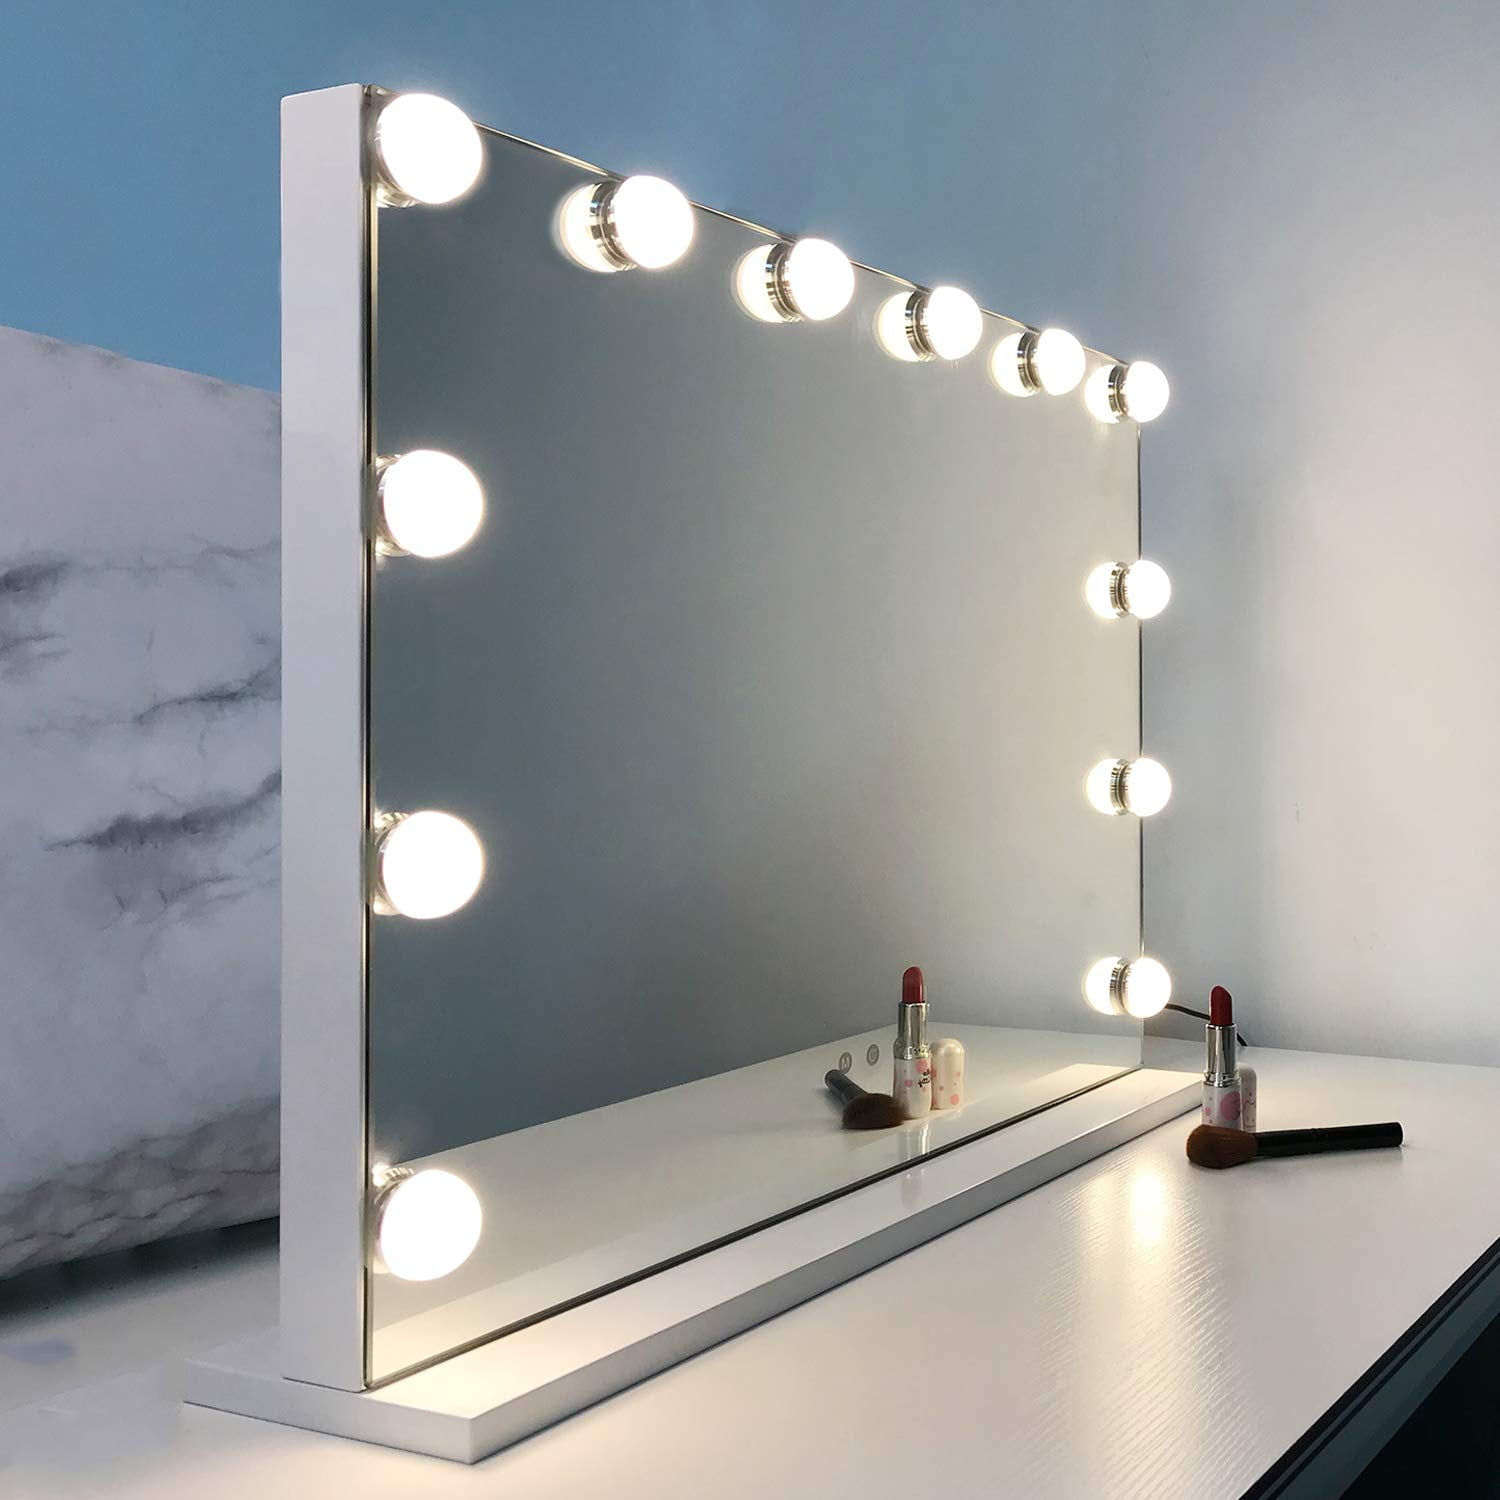 Wayking Vanity Mirror With Lights, Small Cream Vanity Mirror With Lights And Bluetooth